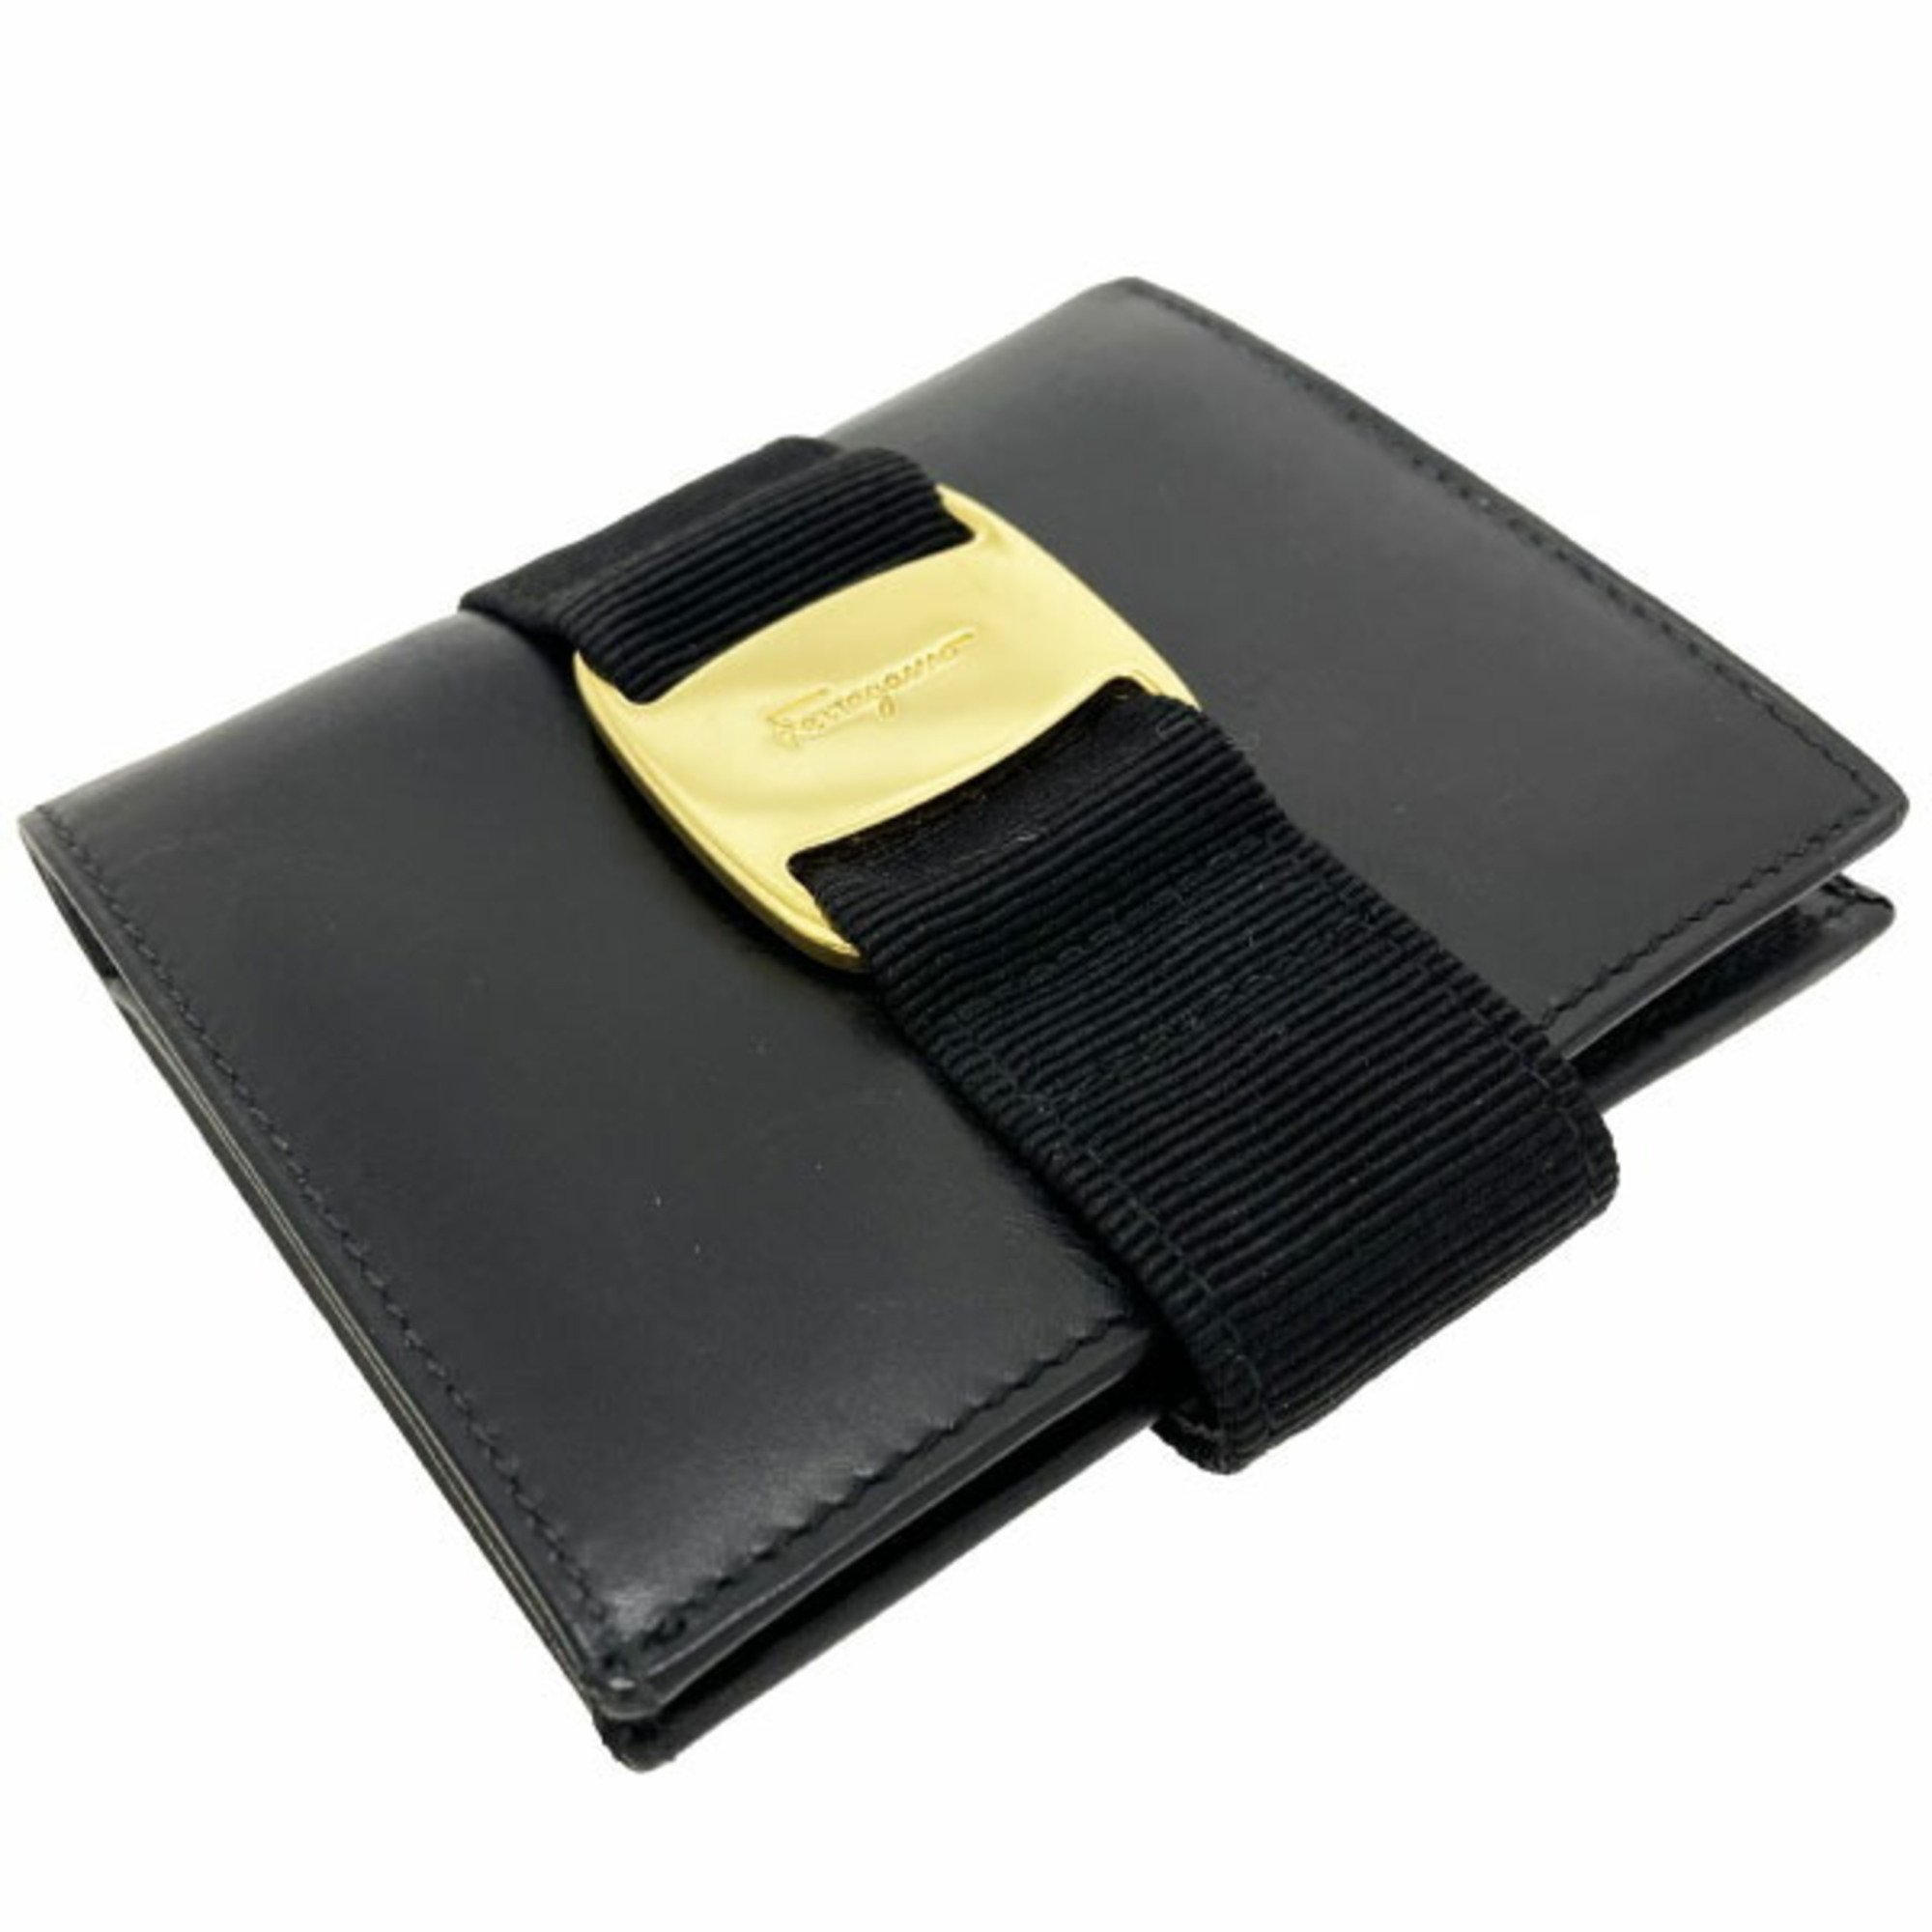 Salvatore Ferragamo Wallet Vara Bi-fold Leather Black 22 3053 Compact Women's XW-12725